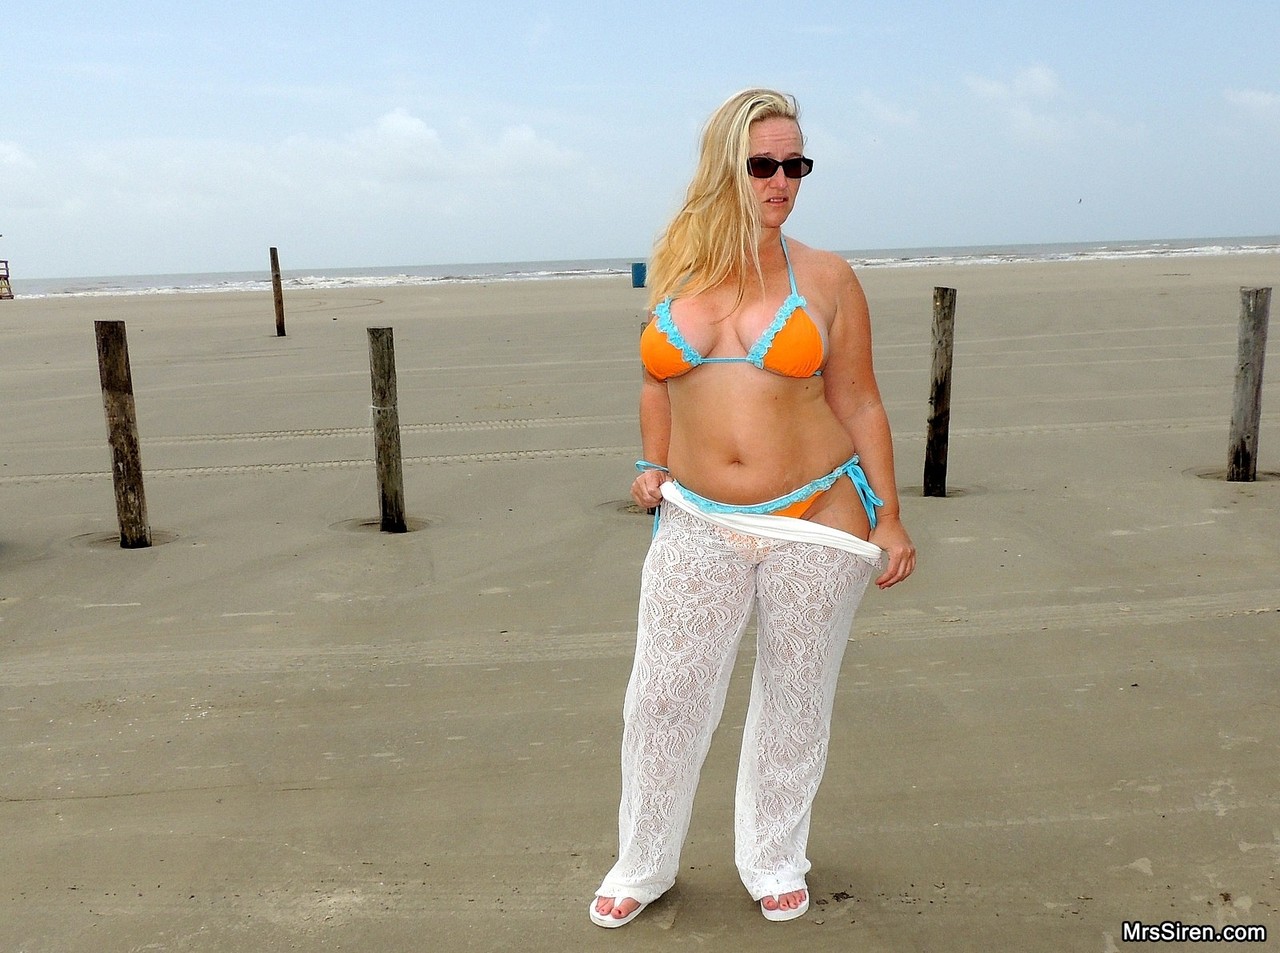 Short MILF Dee Siren strips on the beach & exposes her monster curves foto porno #425972299 | Mrs Siren Pics, Dee Siren, Chubby, porno móvil